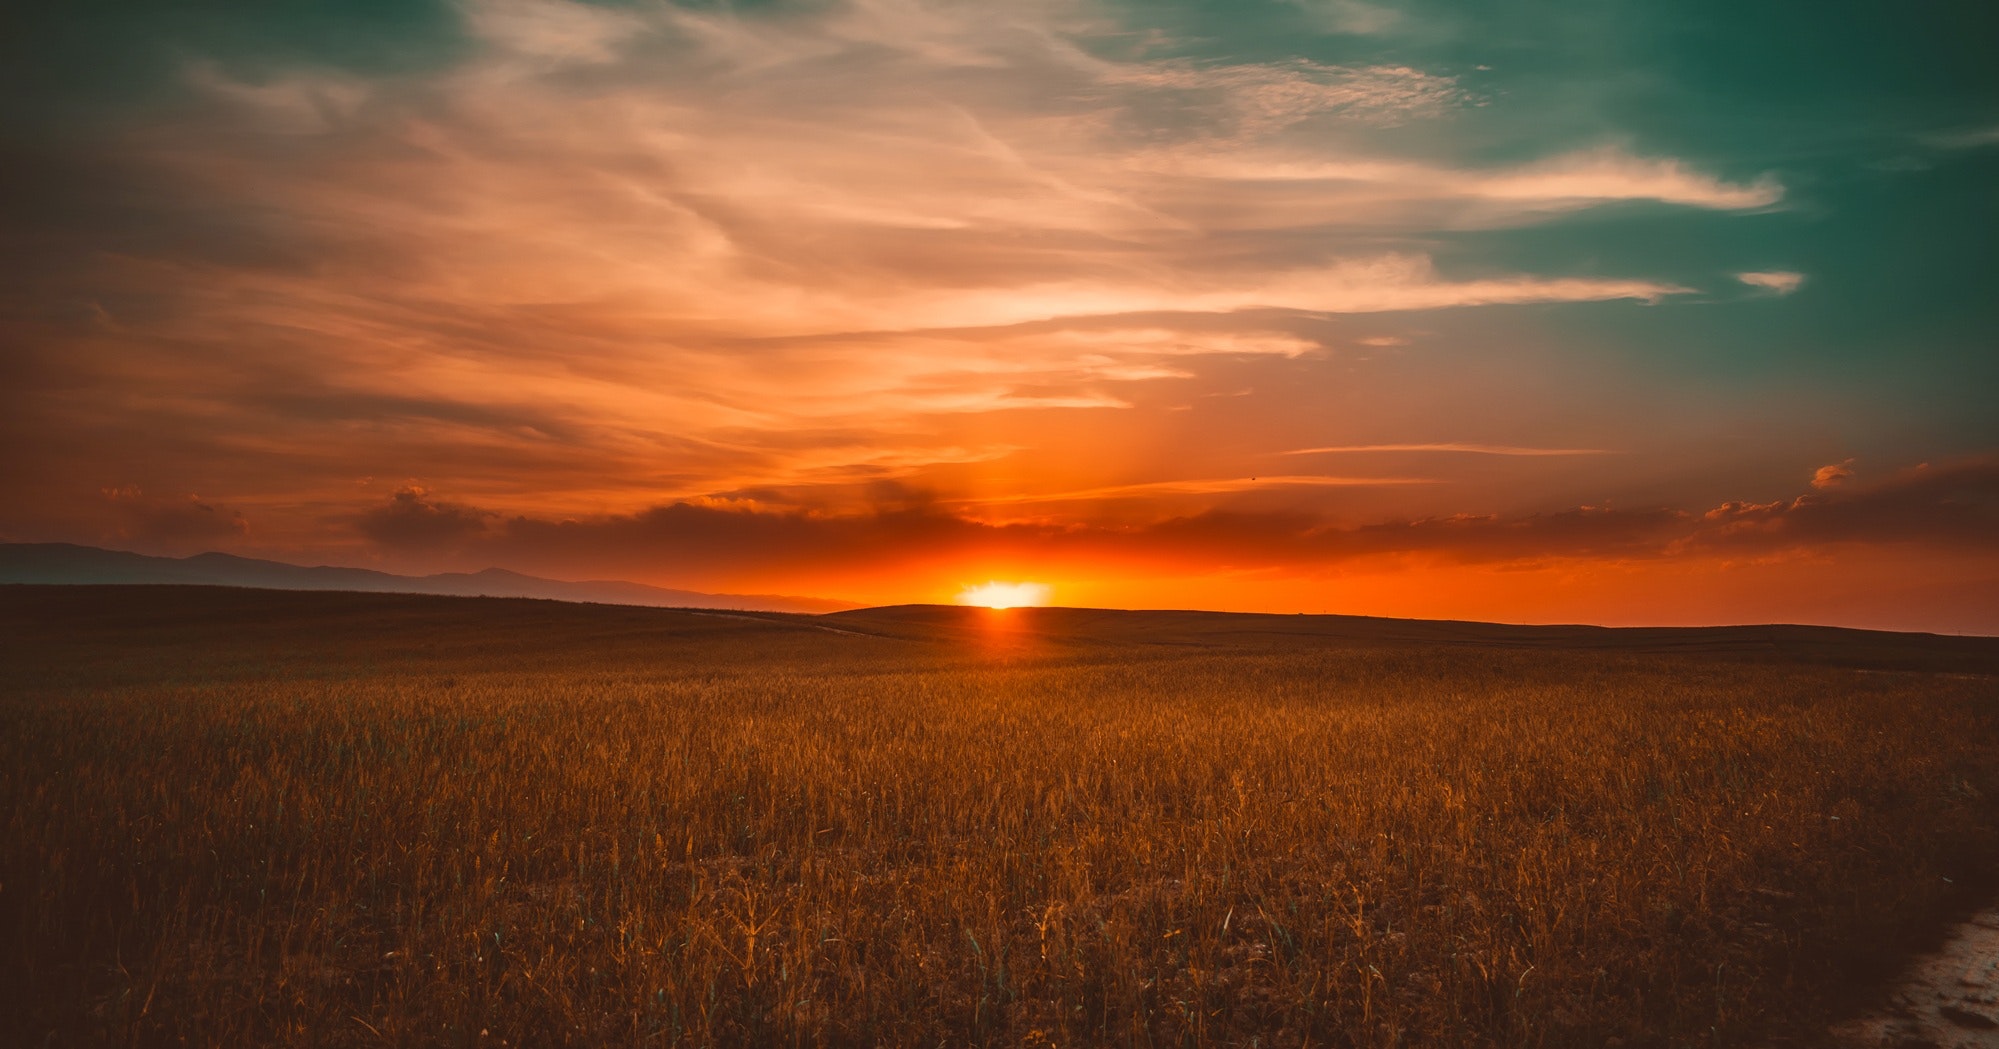 1000+ Amazing Sunset Sky Photos · Pexels · Free Stock Photos